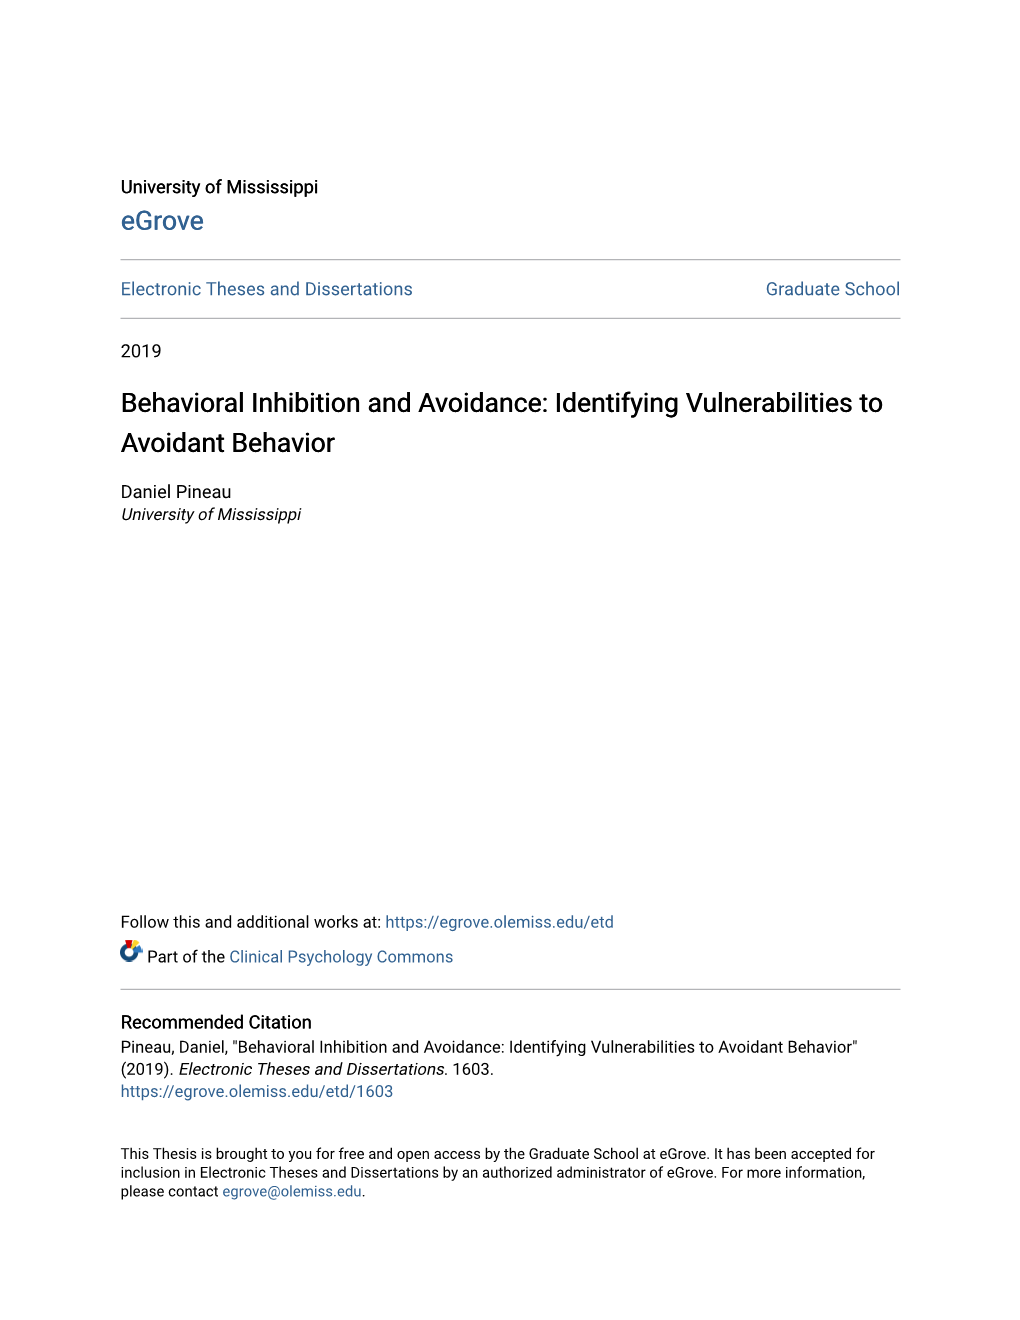 Behavioral Inhibition and Avoidance: Identifying Vulnerabilities to Avoidant Behavior